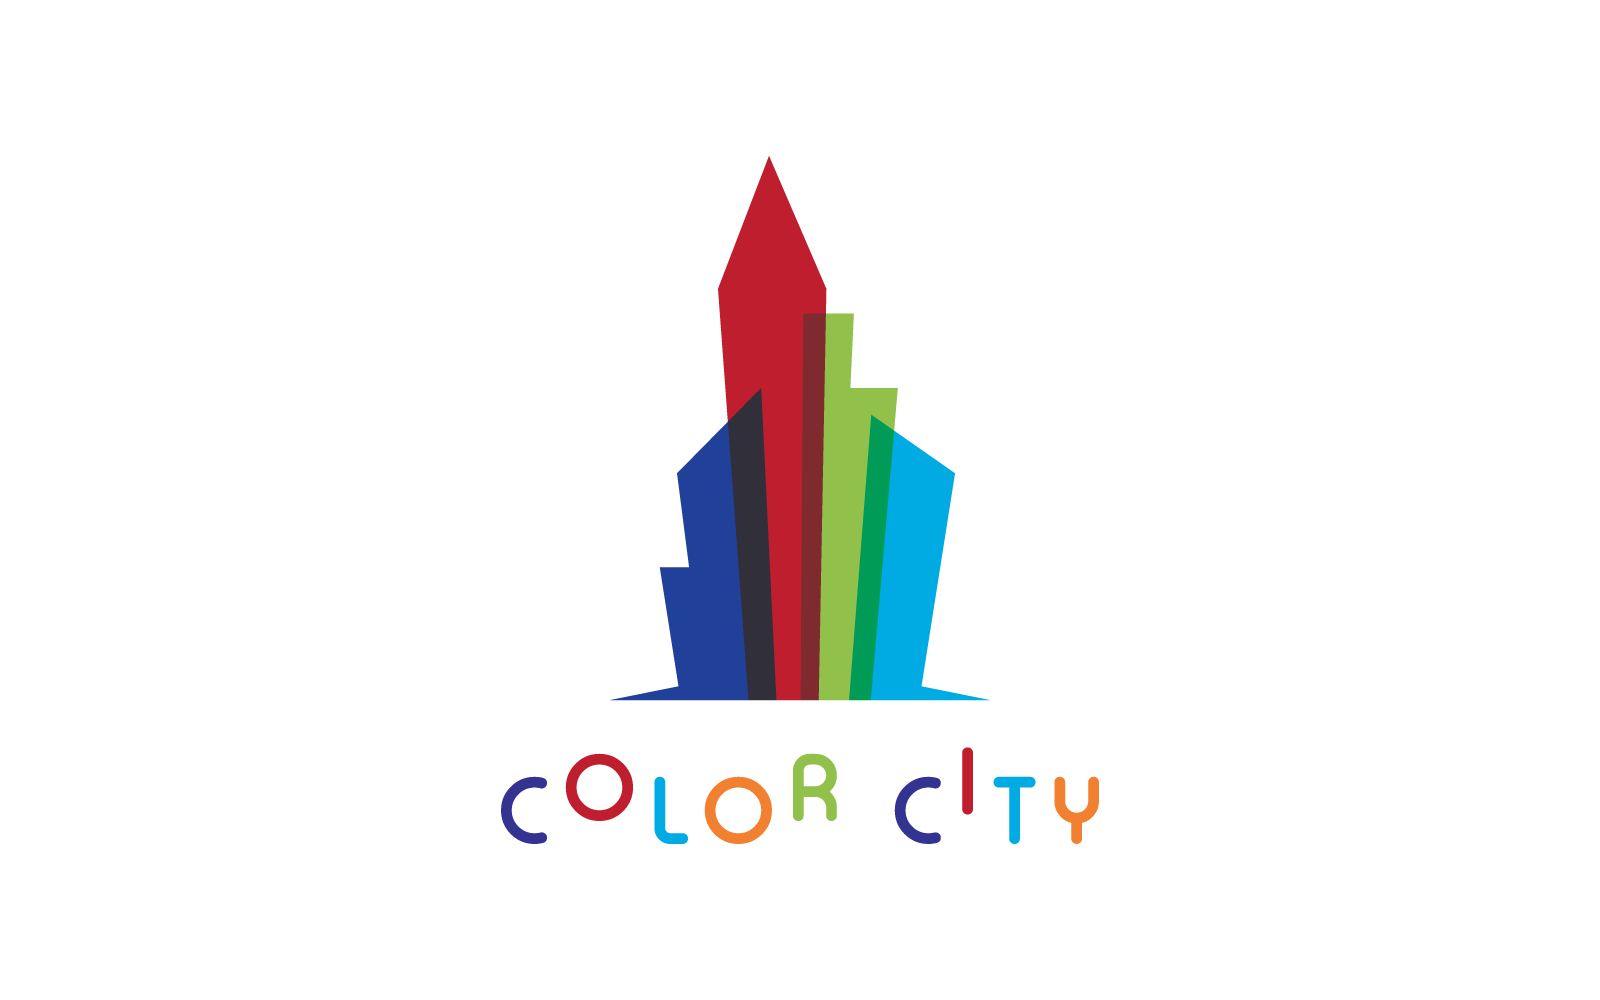 Modern City skyline vector illustration template